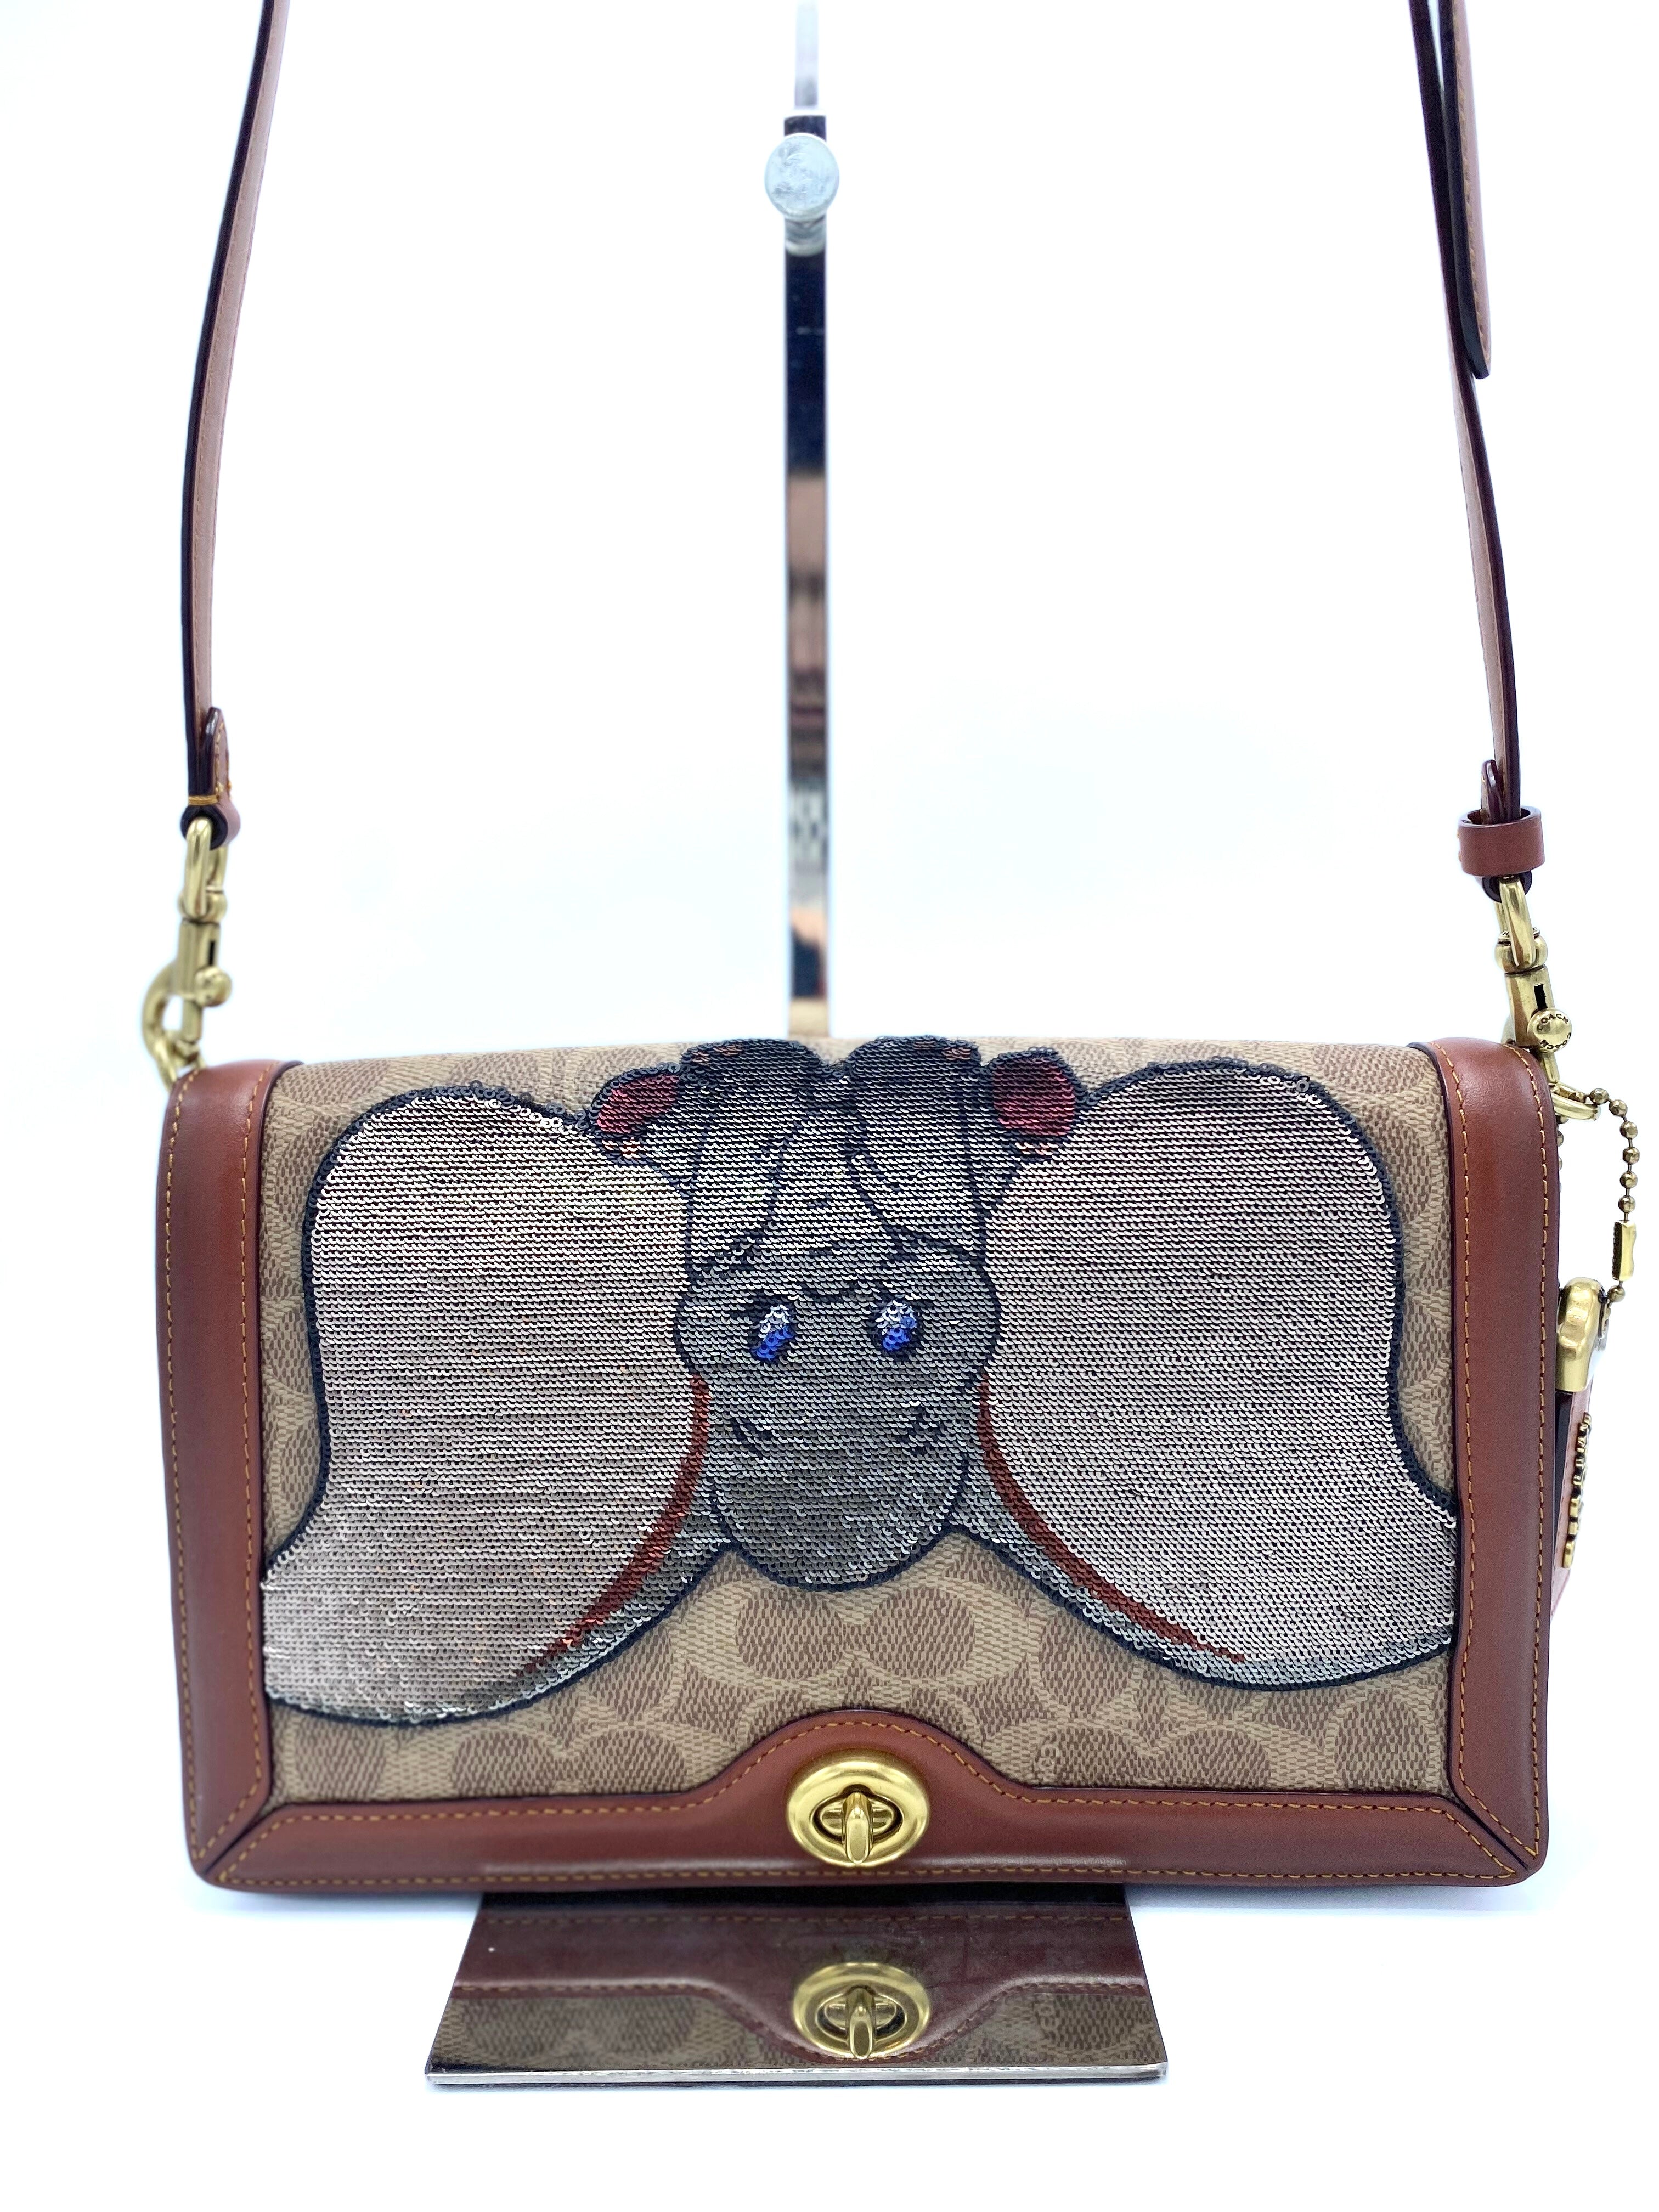 Bandolera Coach x Disney Dumbo Cross Body Bag Colección Especial Edicion Limitada